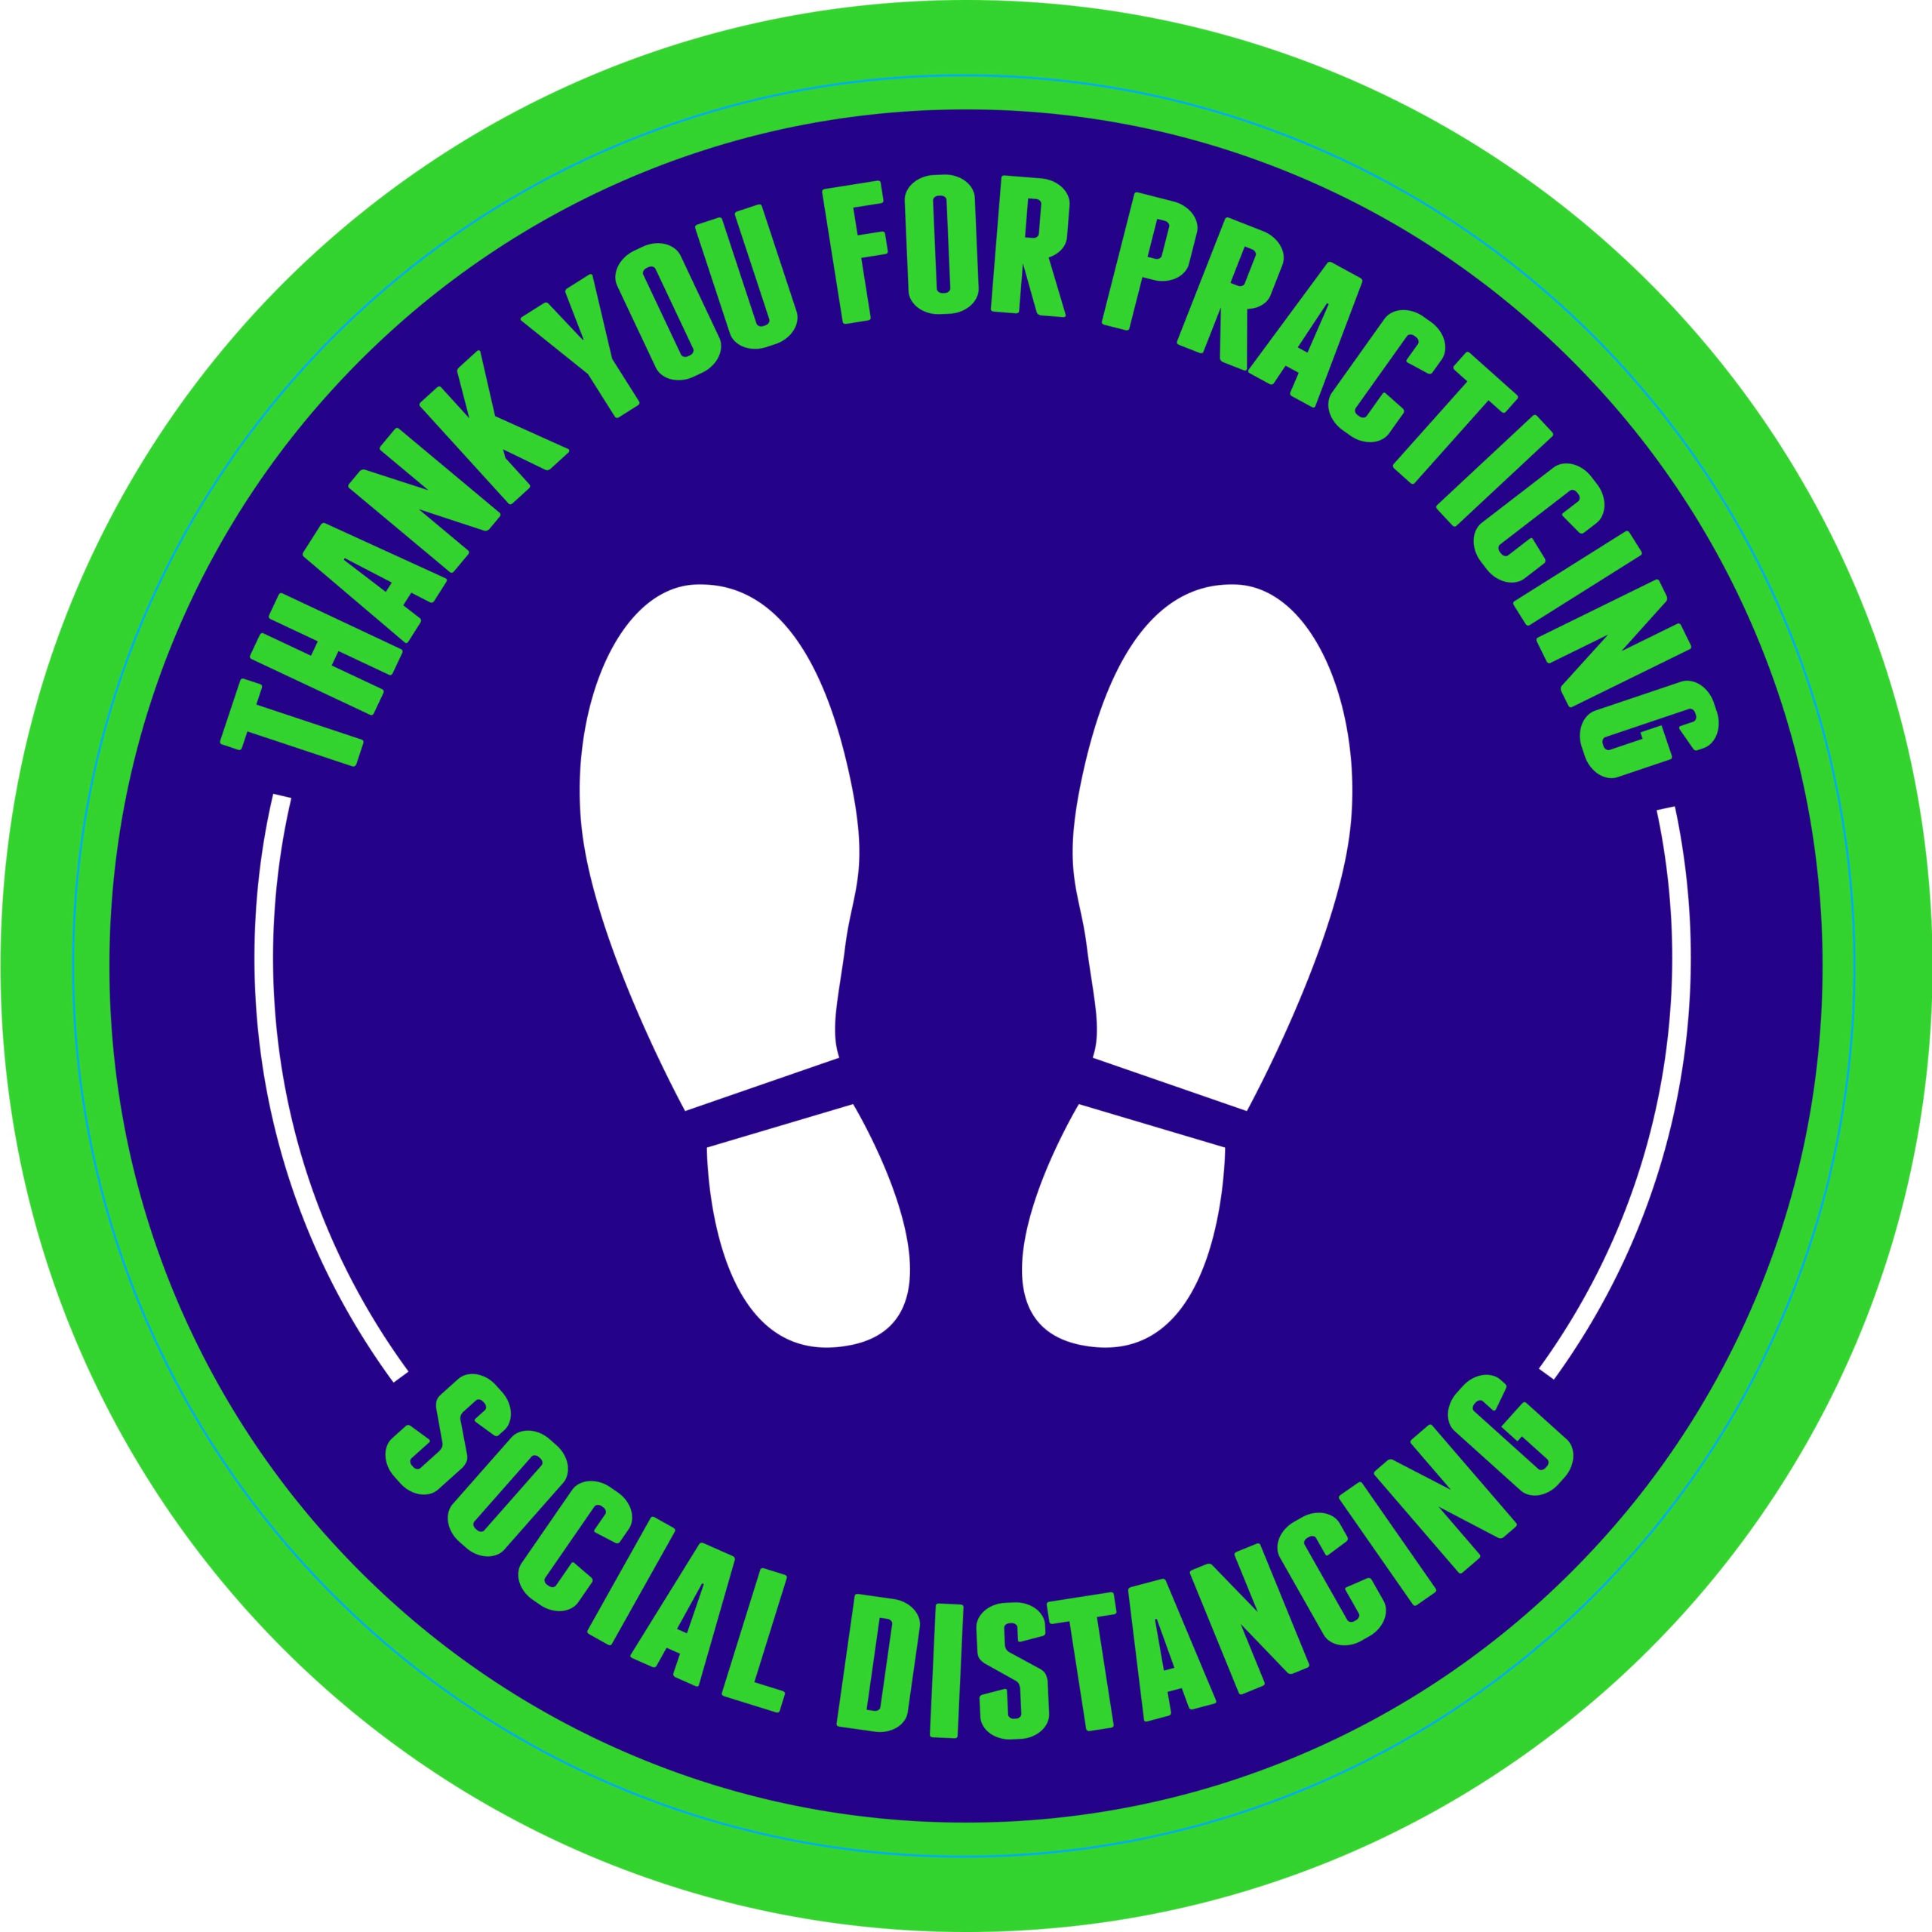 SD - Social Distancing Floor 18" Diameter - PURPLE - 4 pack